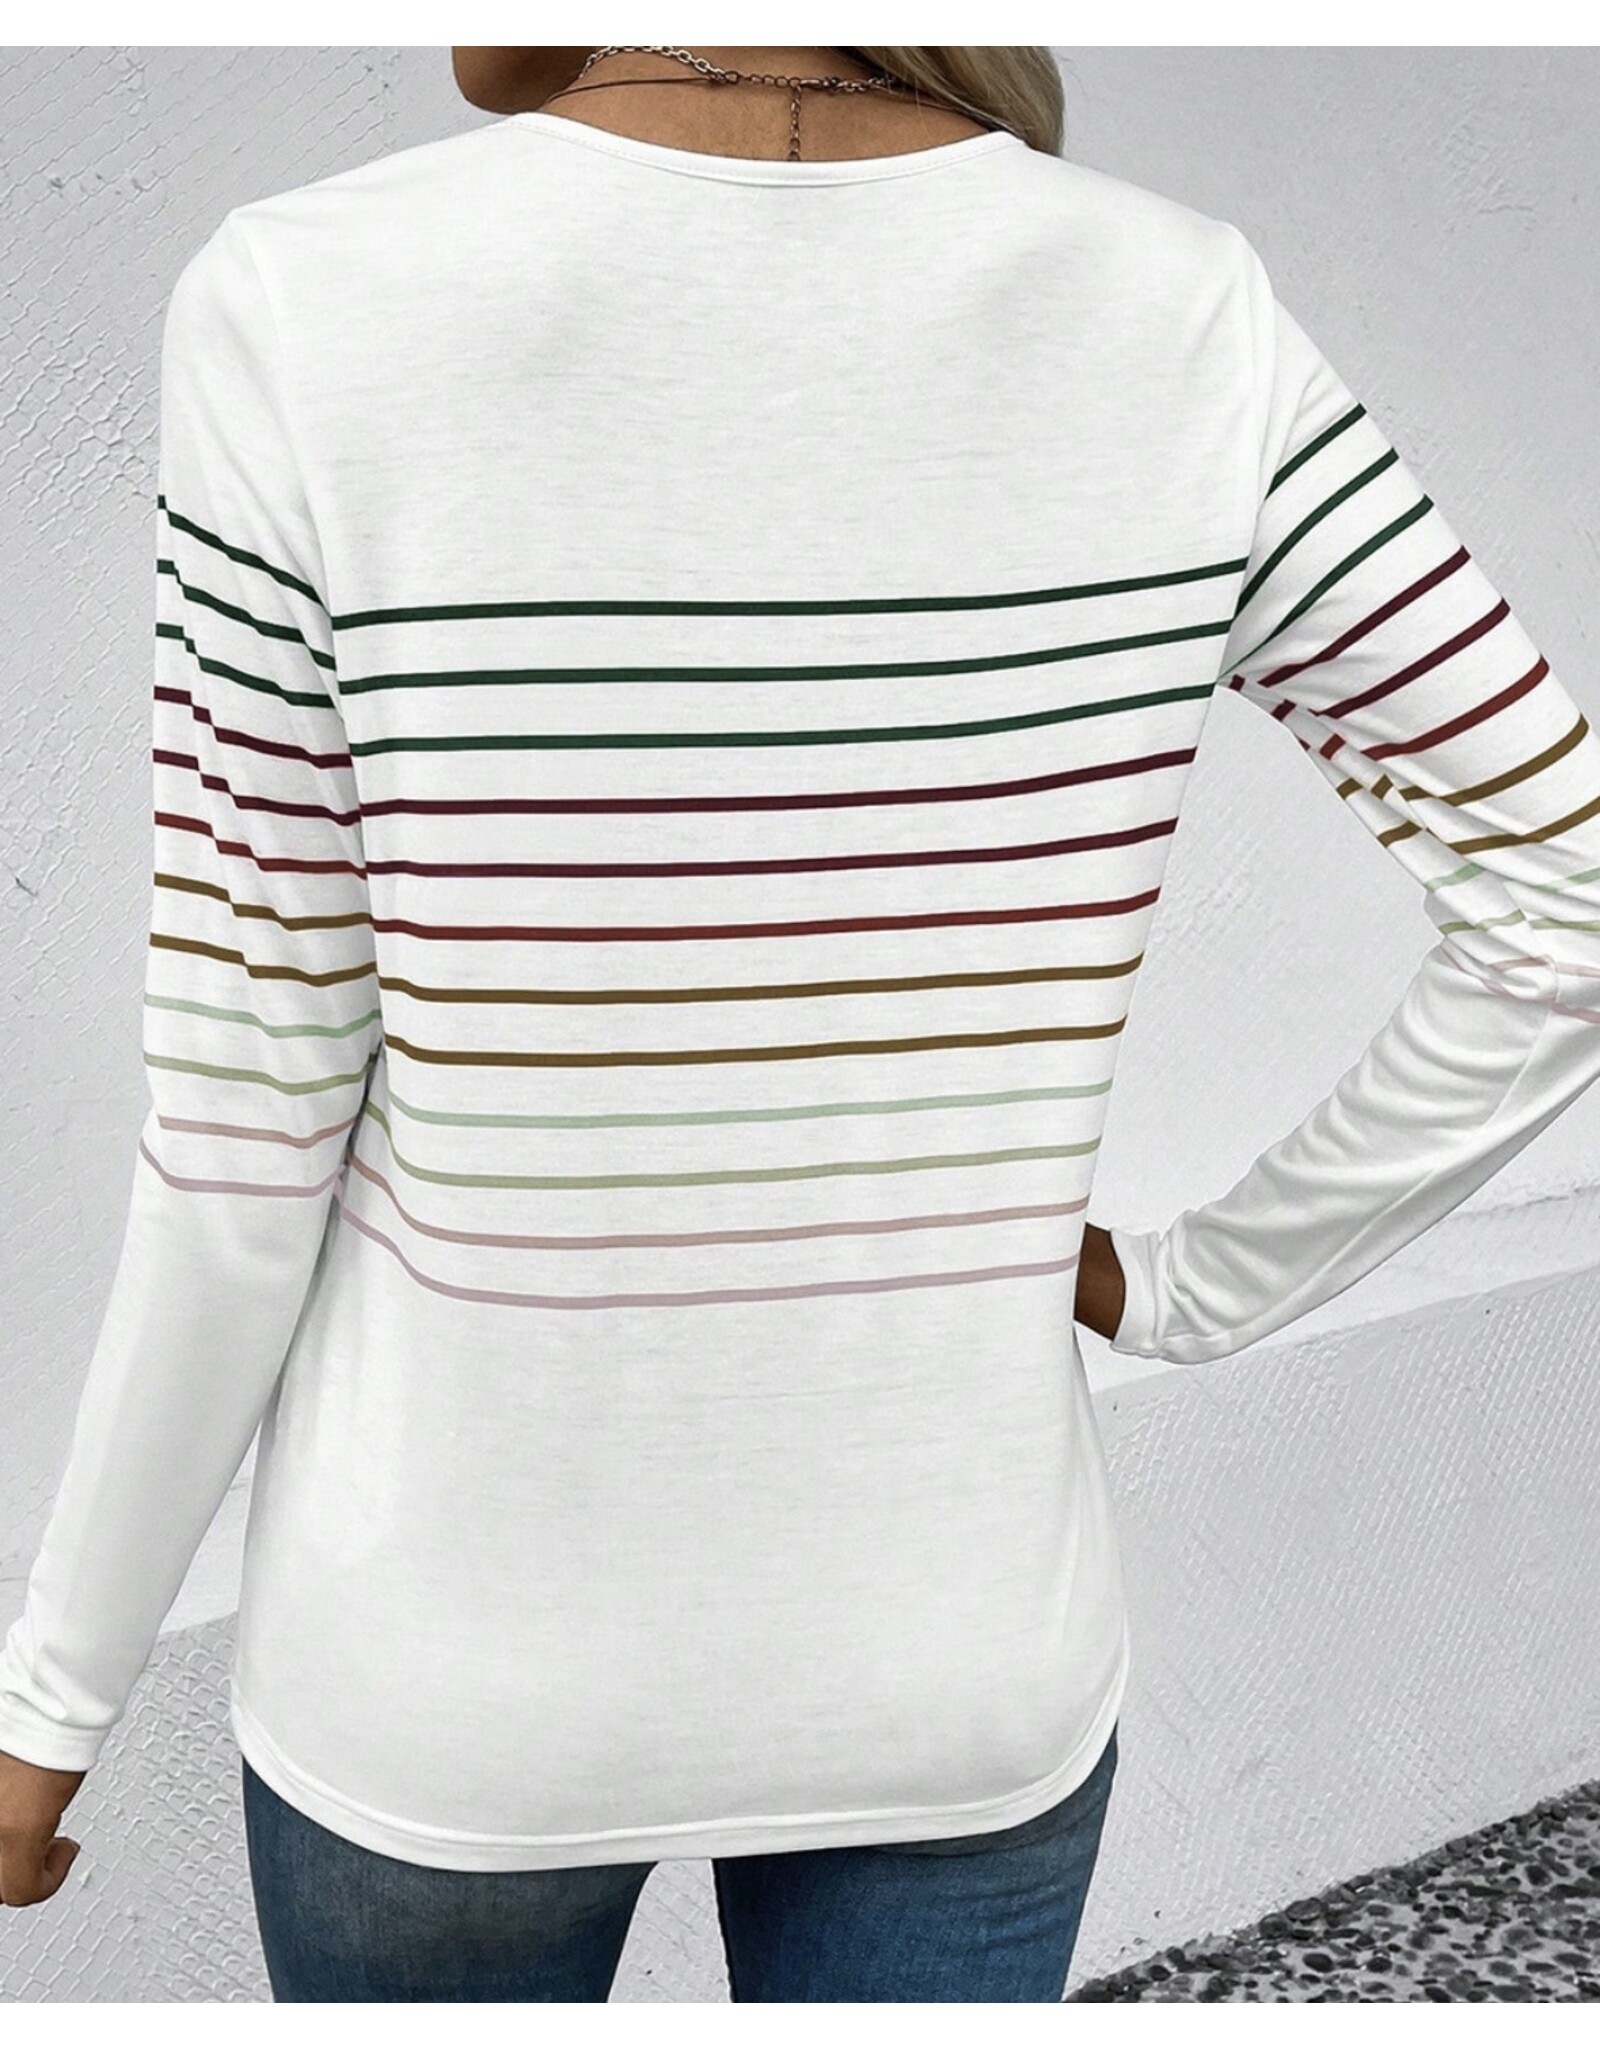 LATA Multicolor Stripe Long Sleeve Top